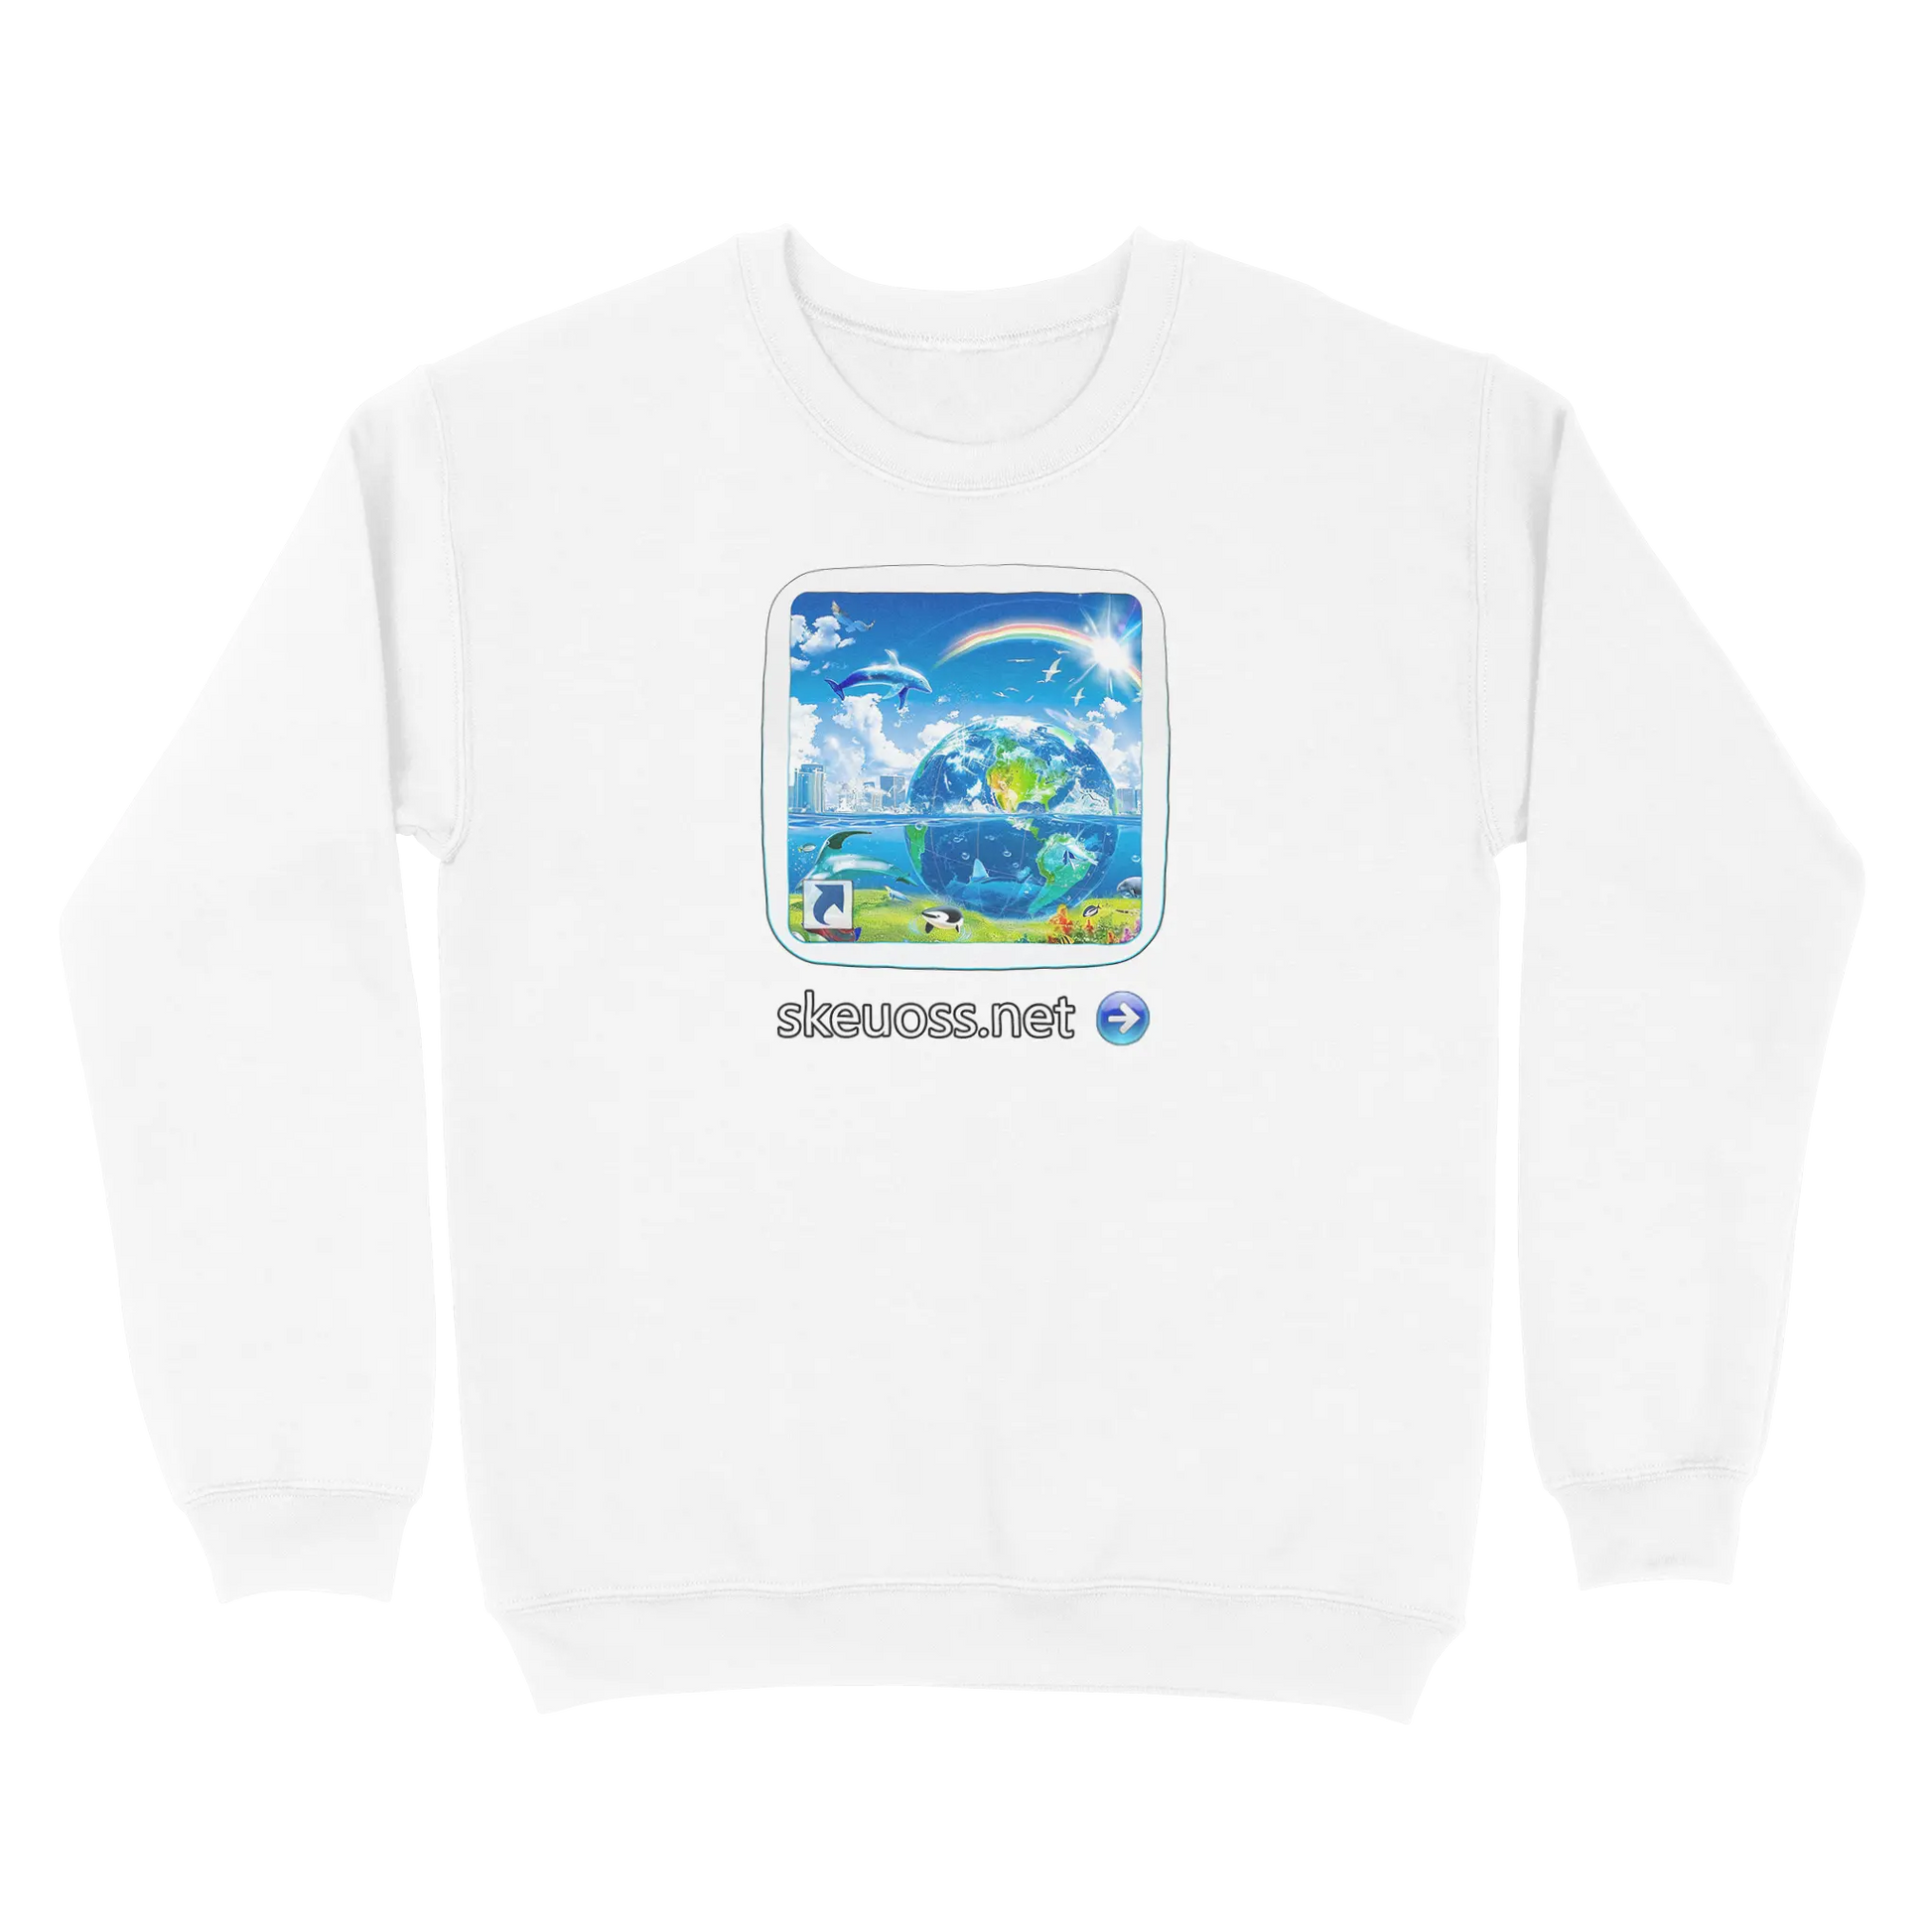 Frutiger Aero Sweatshirt - User Login Collection - User 335